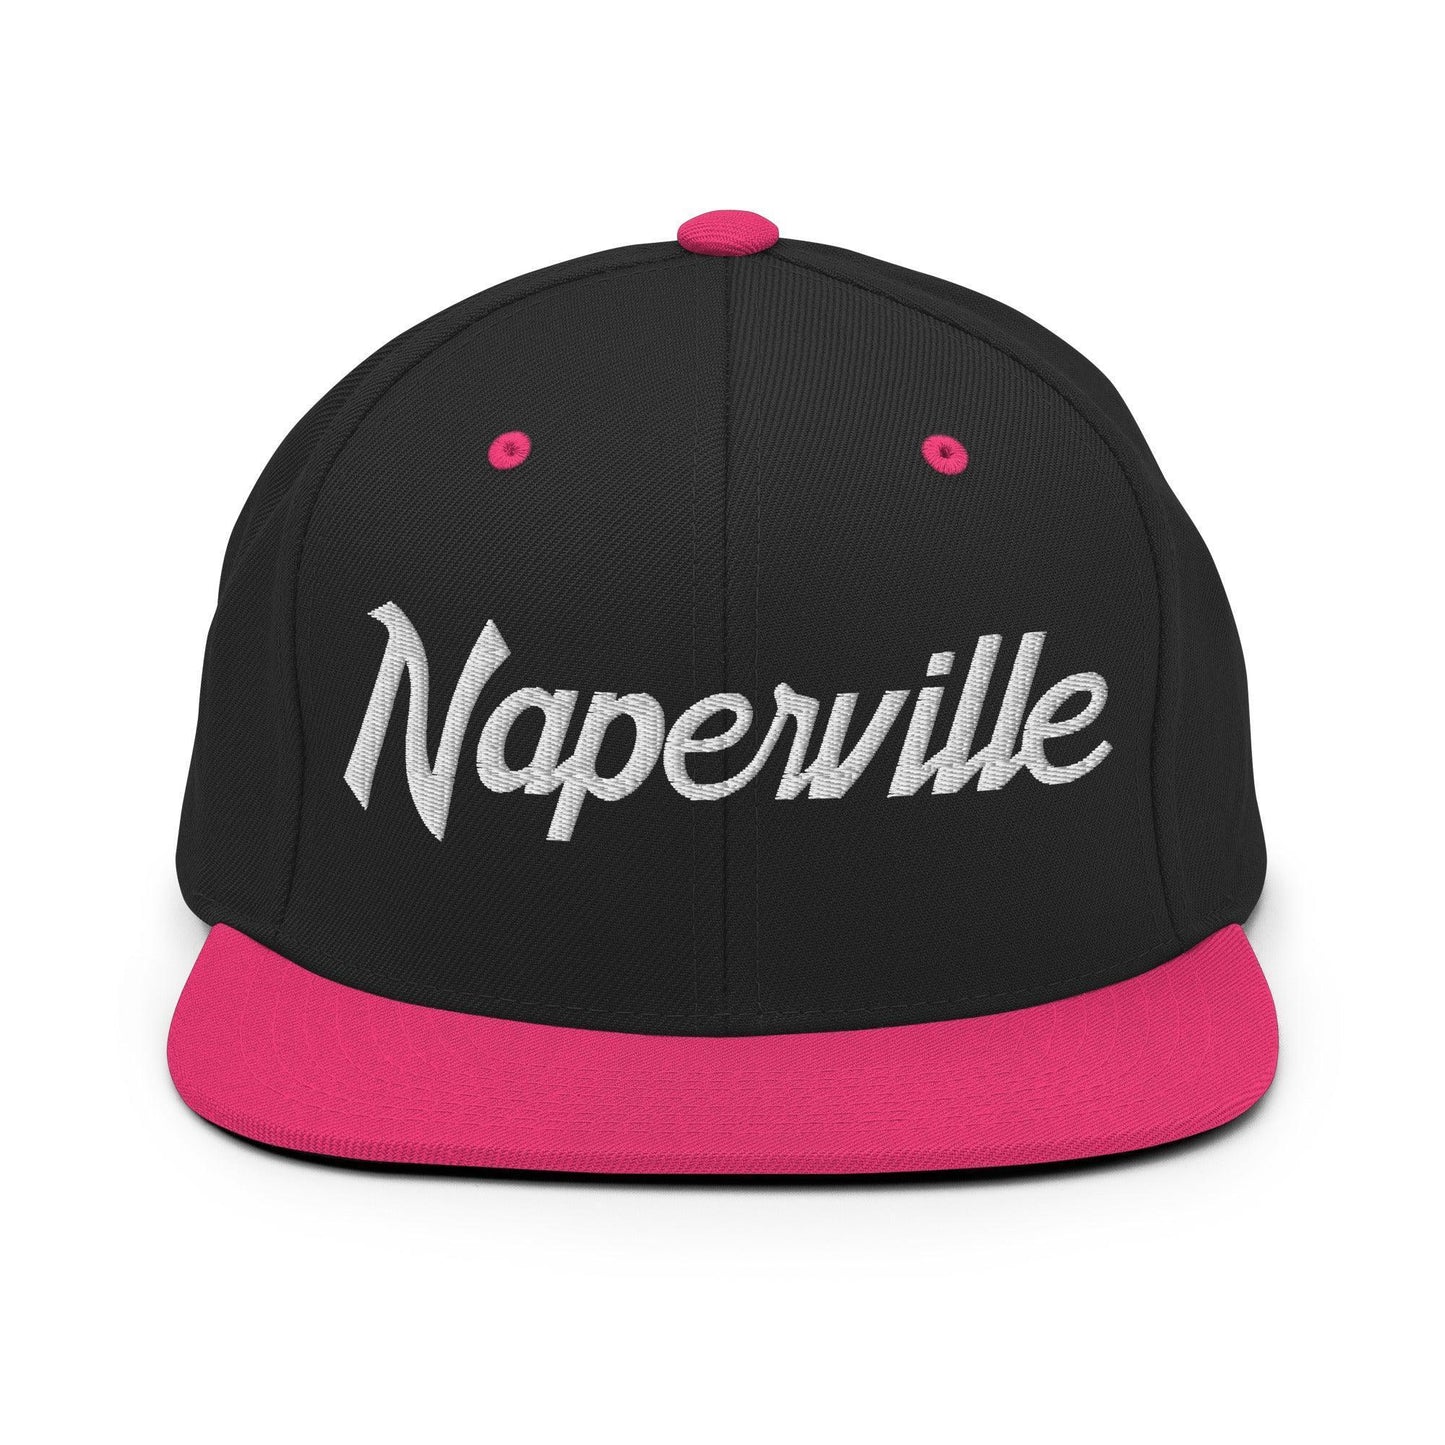 Naperville Script Snapback Hat Black Neon Pink